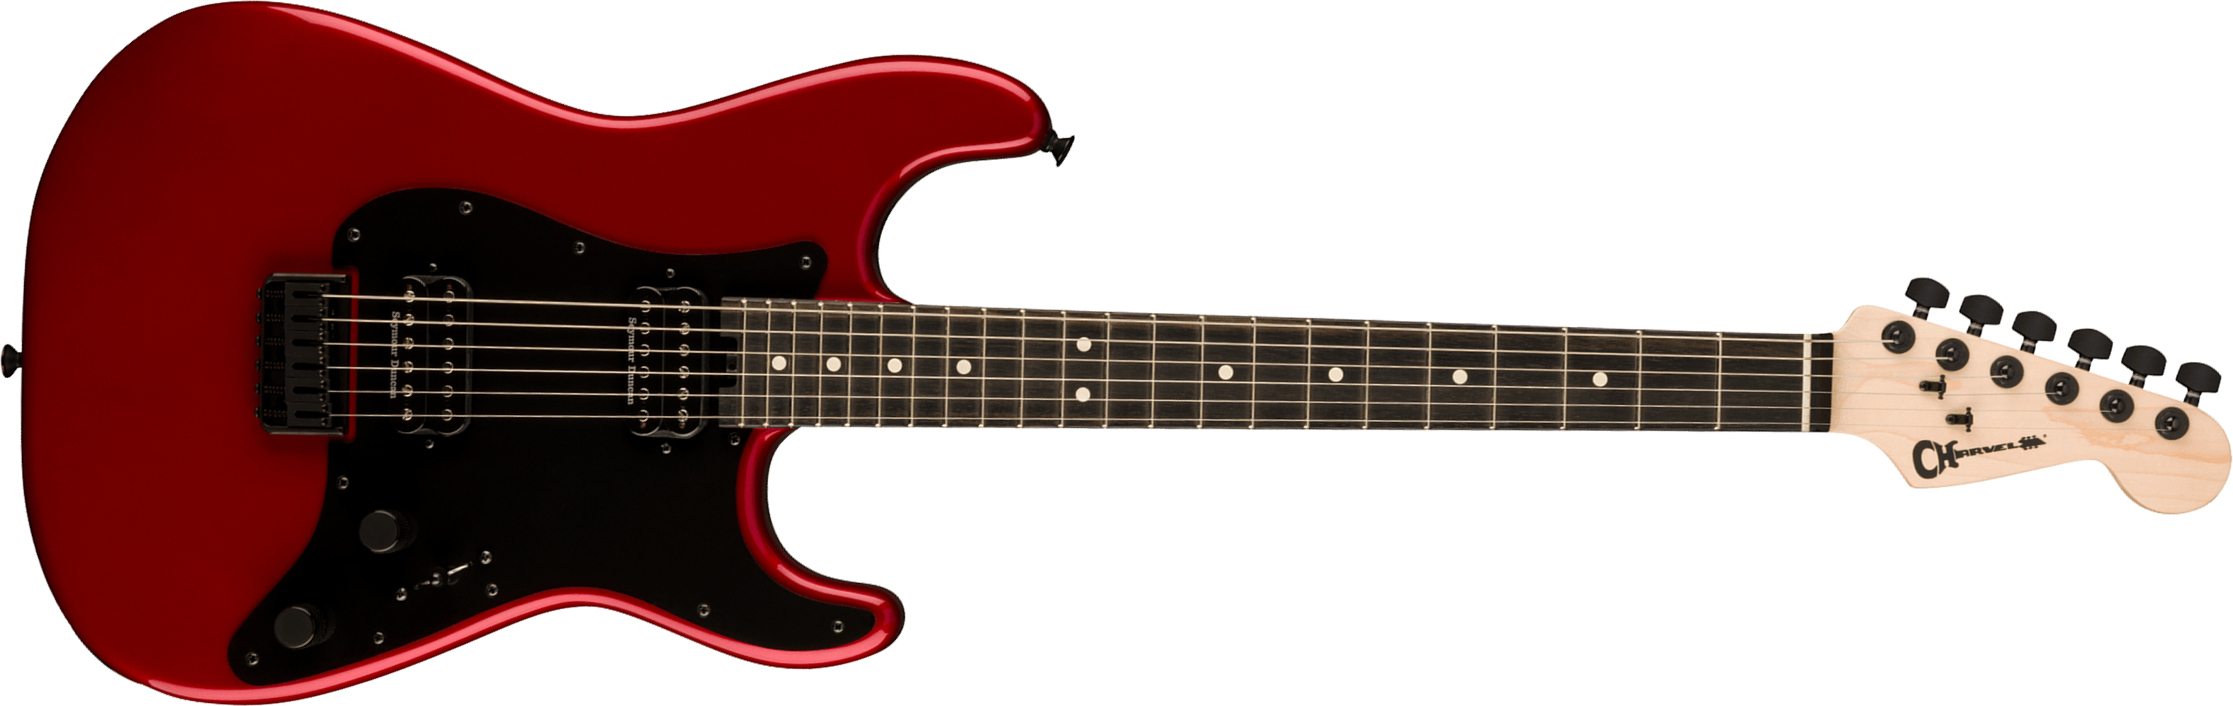 Charvel So-cal Style 1 Hh Ht E Pro-mod 2h Seymour Duncan Eb - Candy Apple Red - Guitare Électrique Forme Str - Main picture